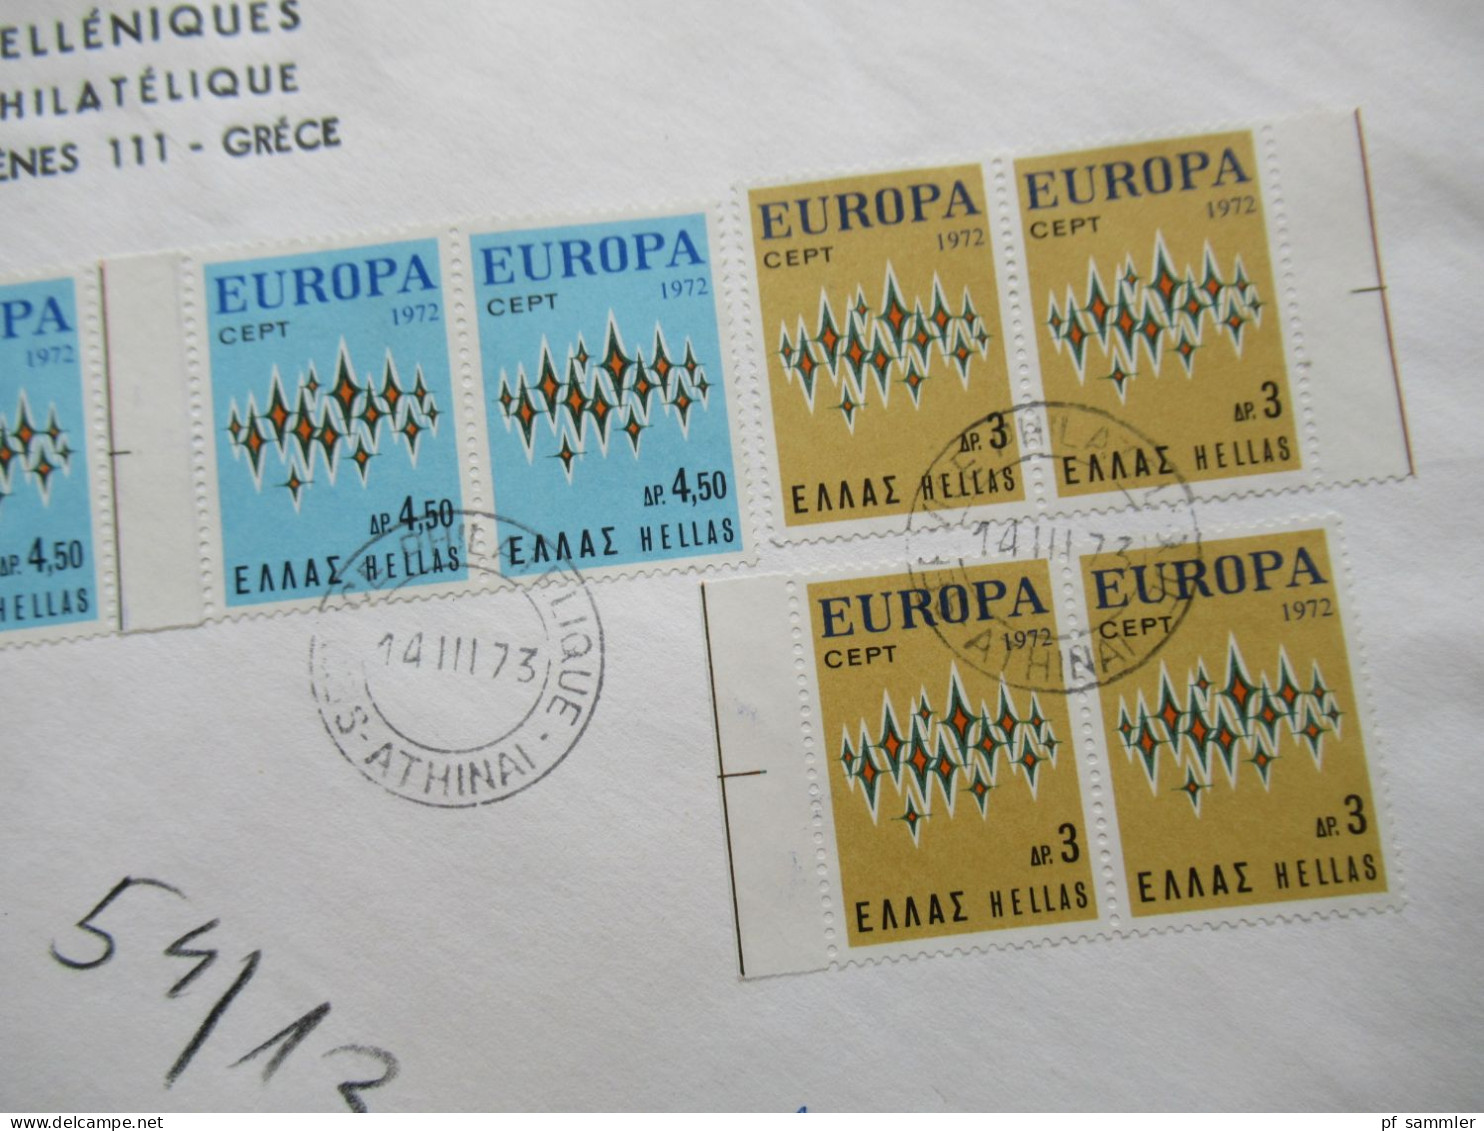 Griechenland Europa Cept 1972 Einschreiben Athinai Postes Helleniques Service Philatelique Nach Bamberg Gesendet - Covers & Documents